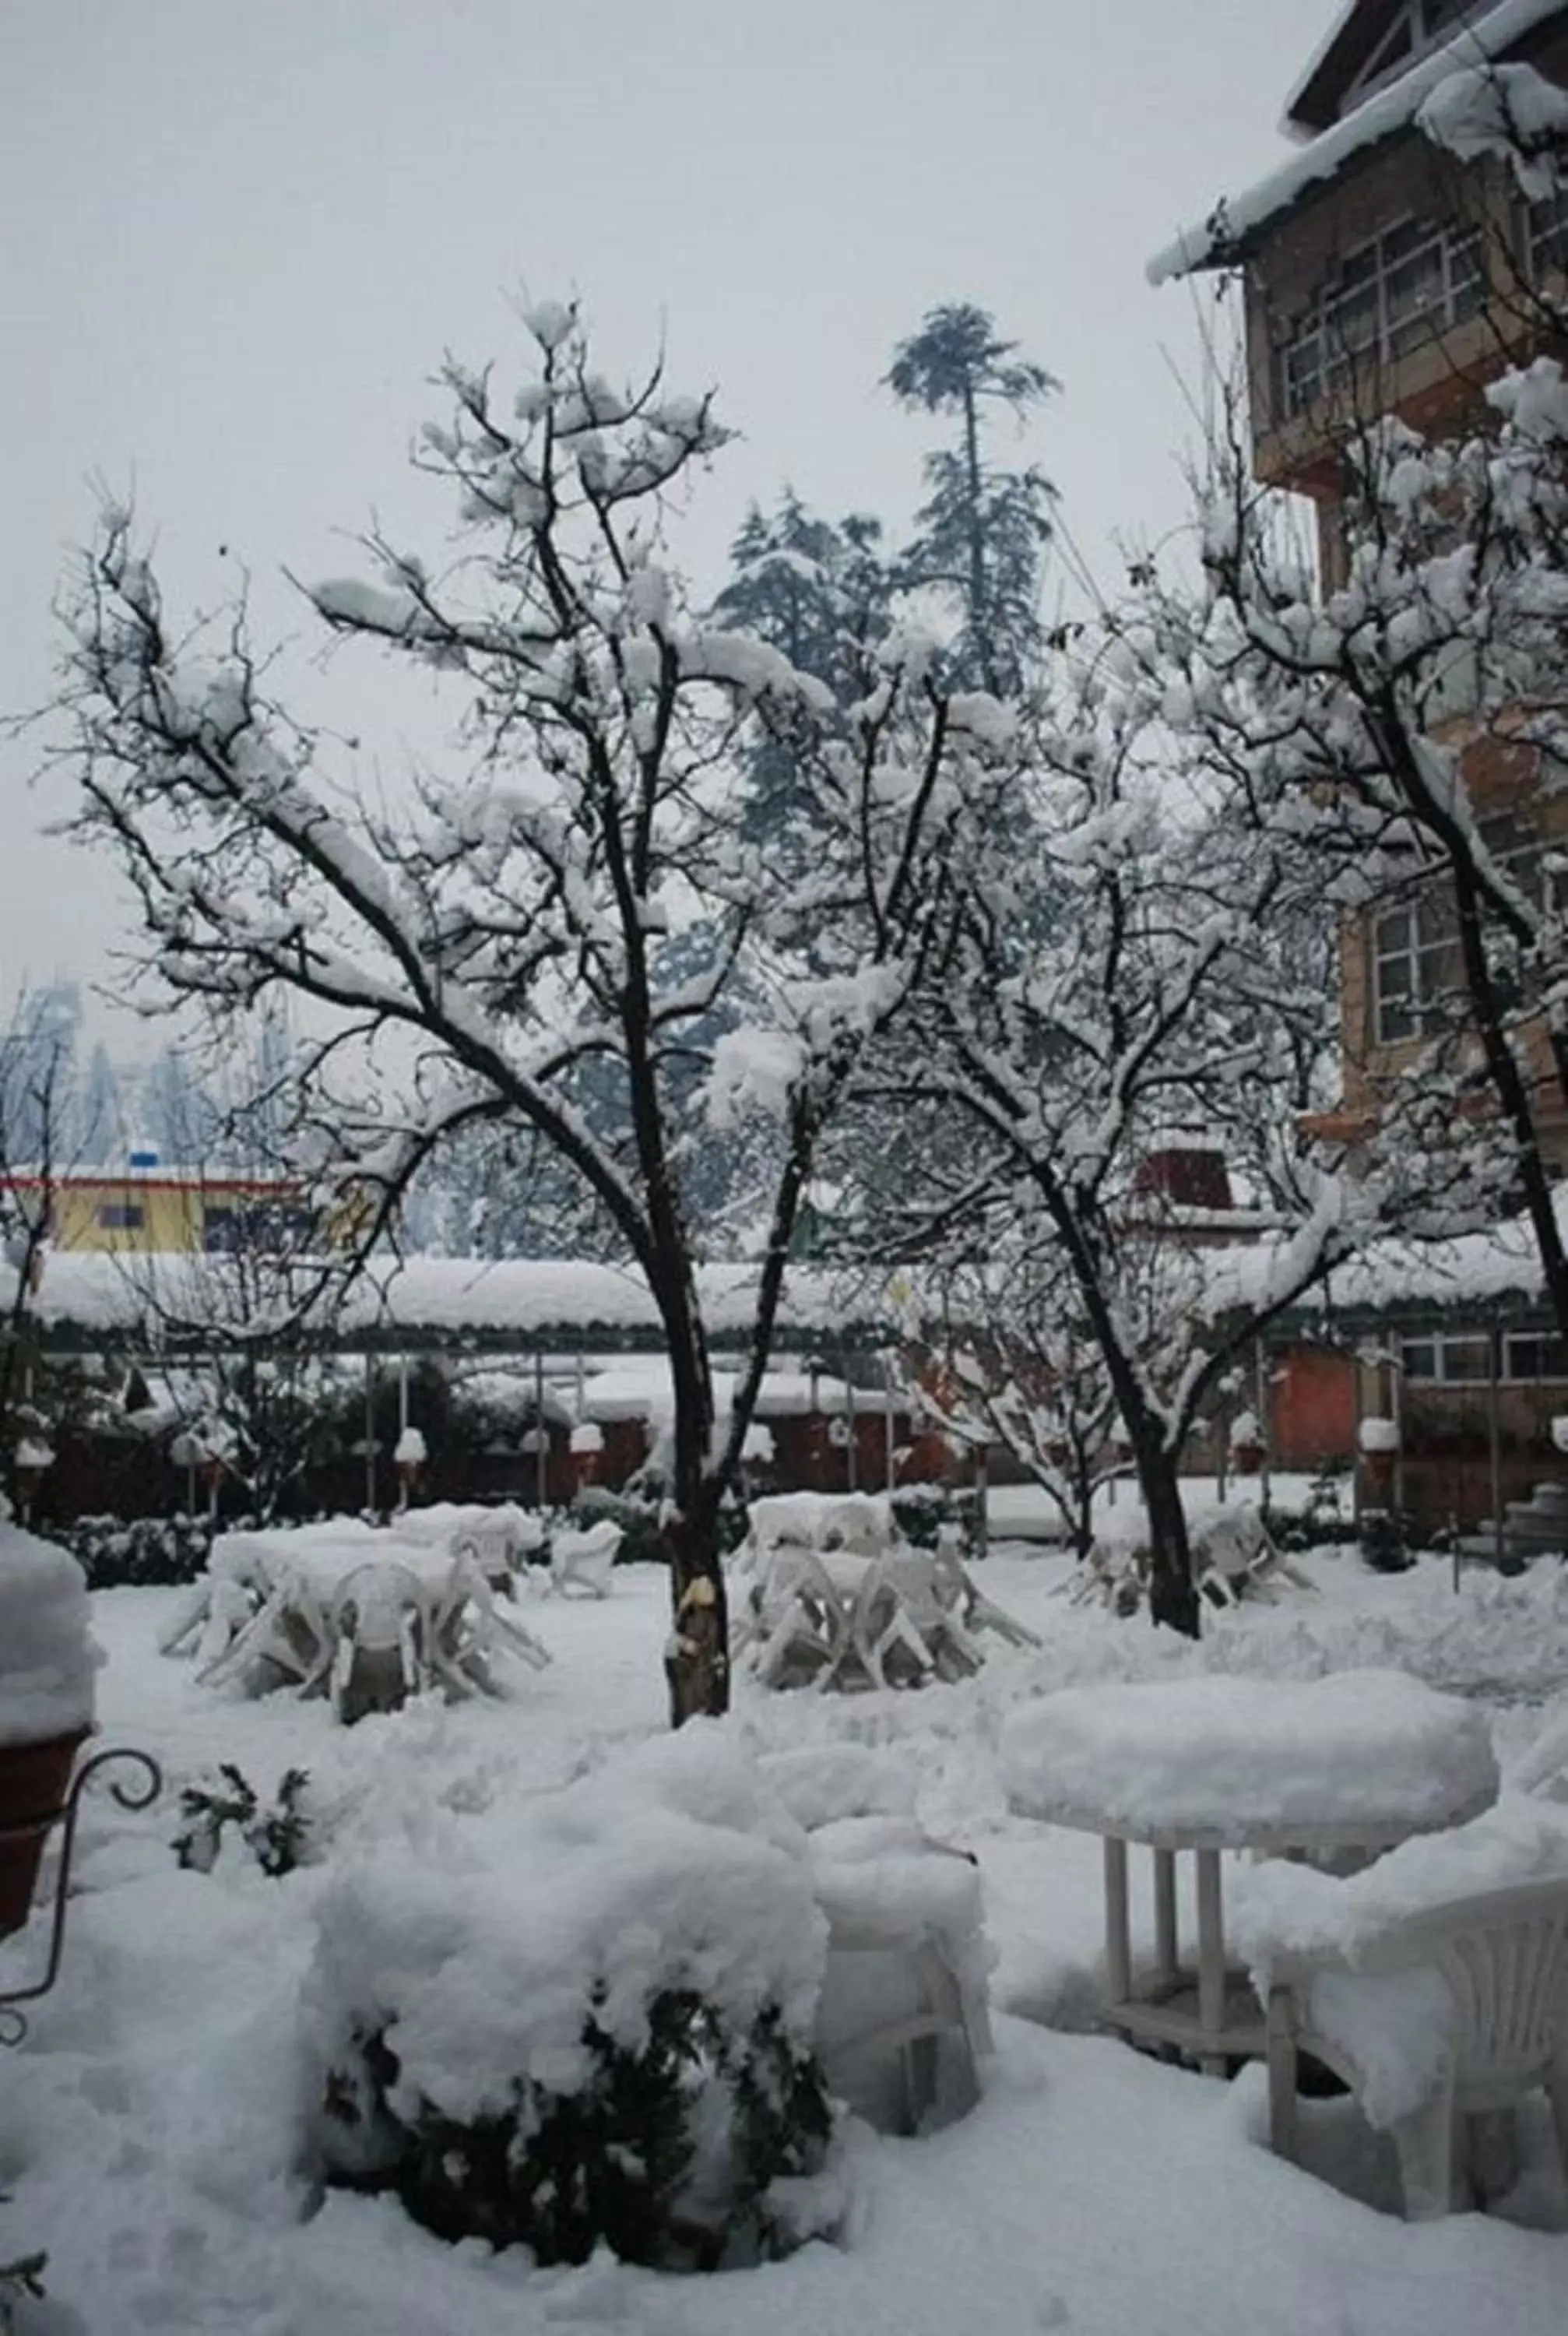 Day, Winter in The Manali Inn